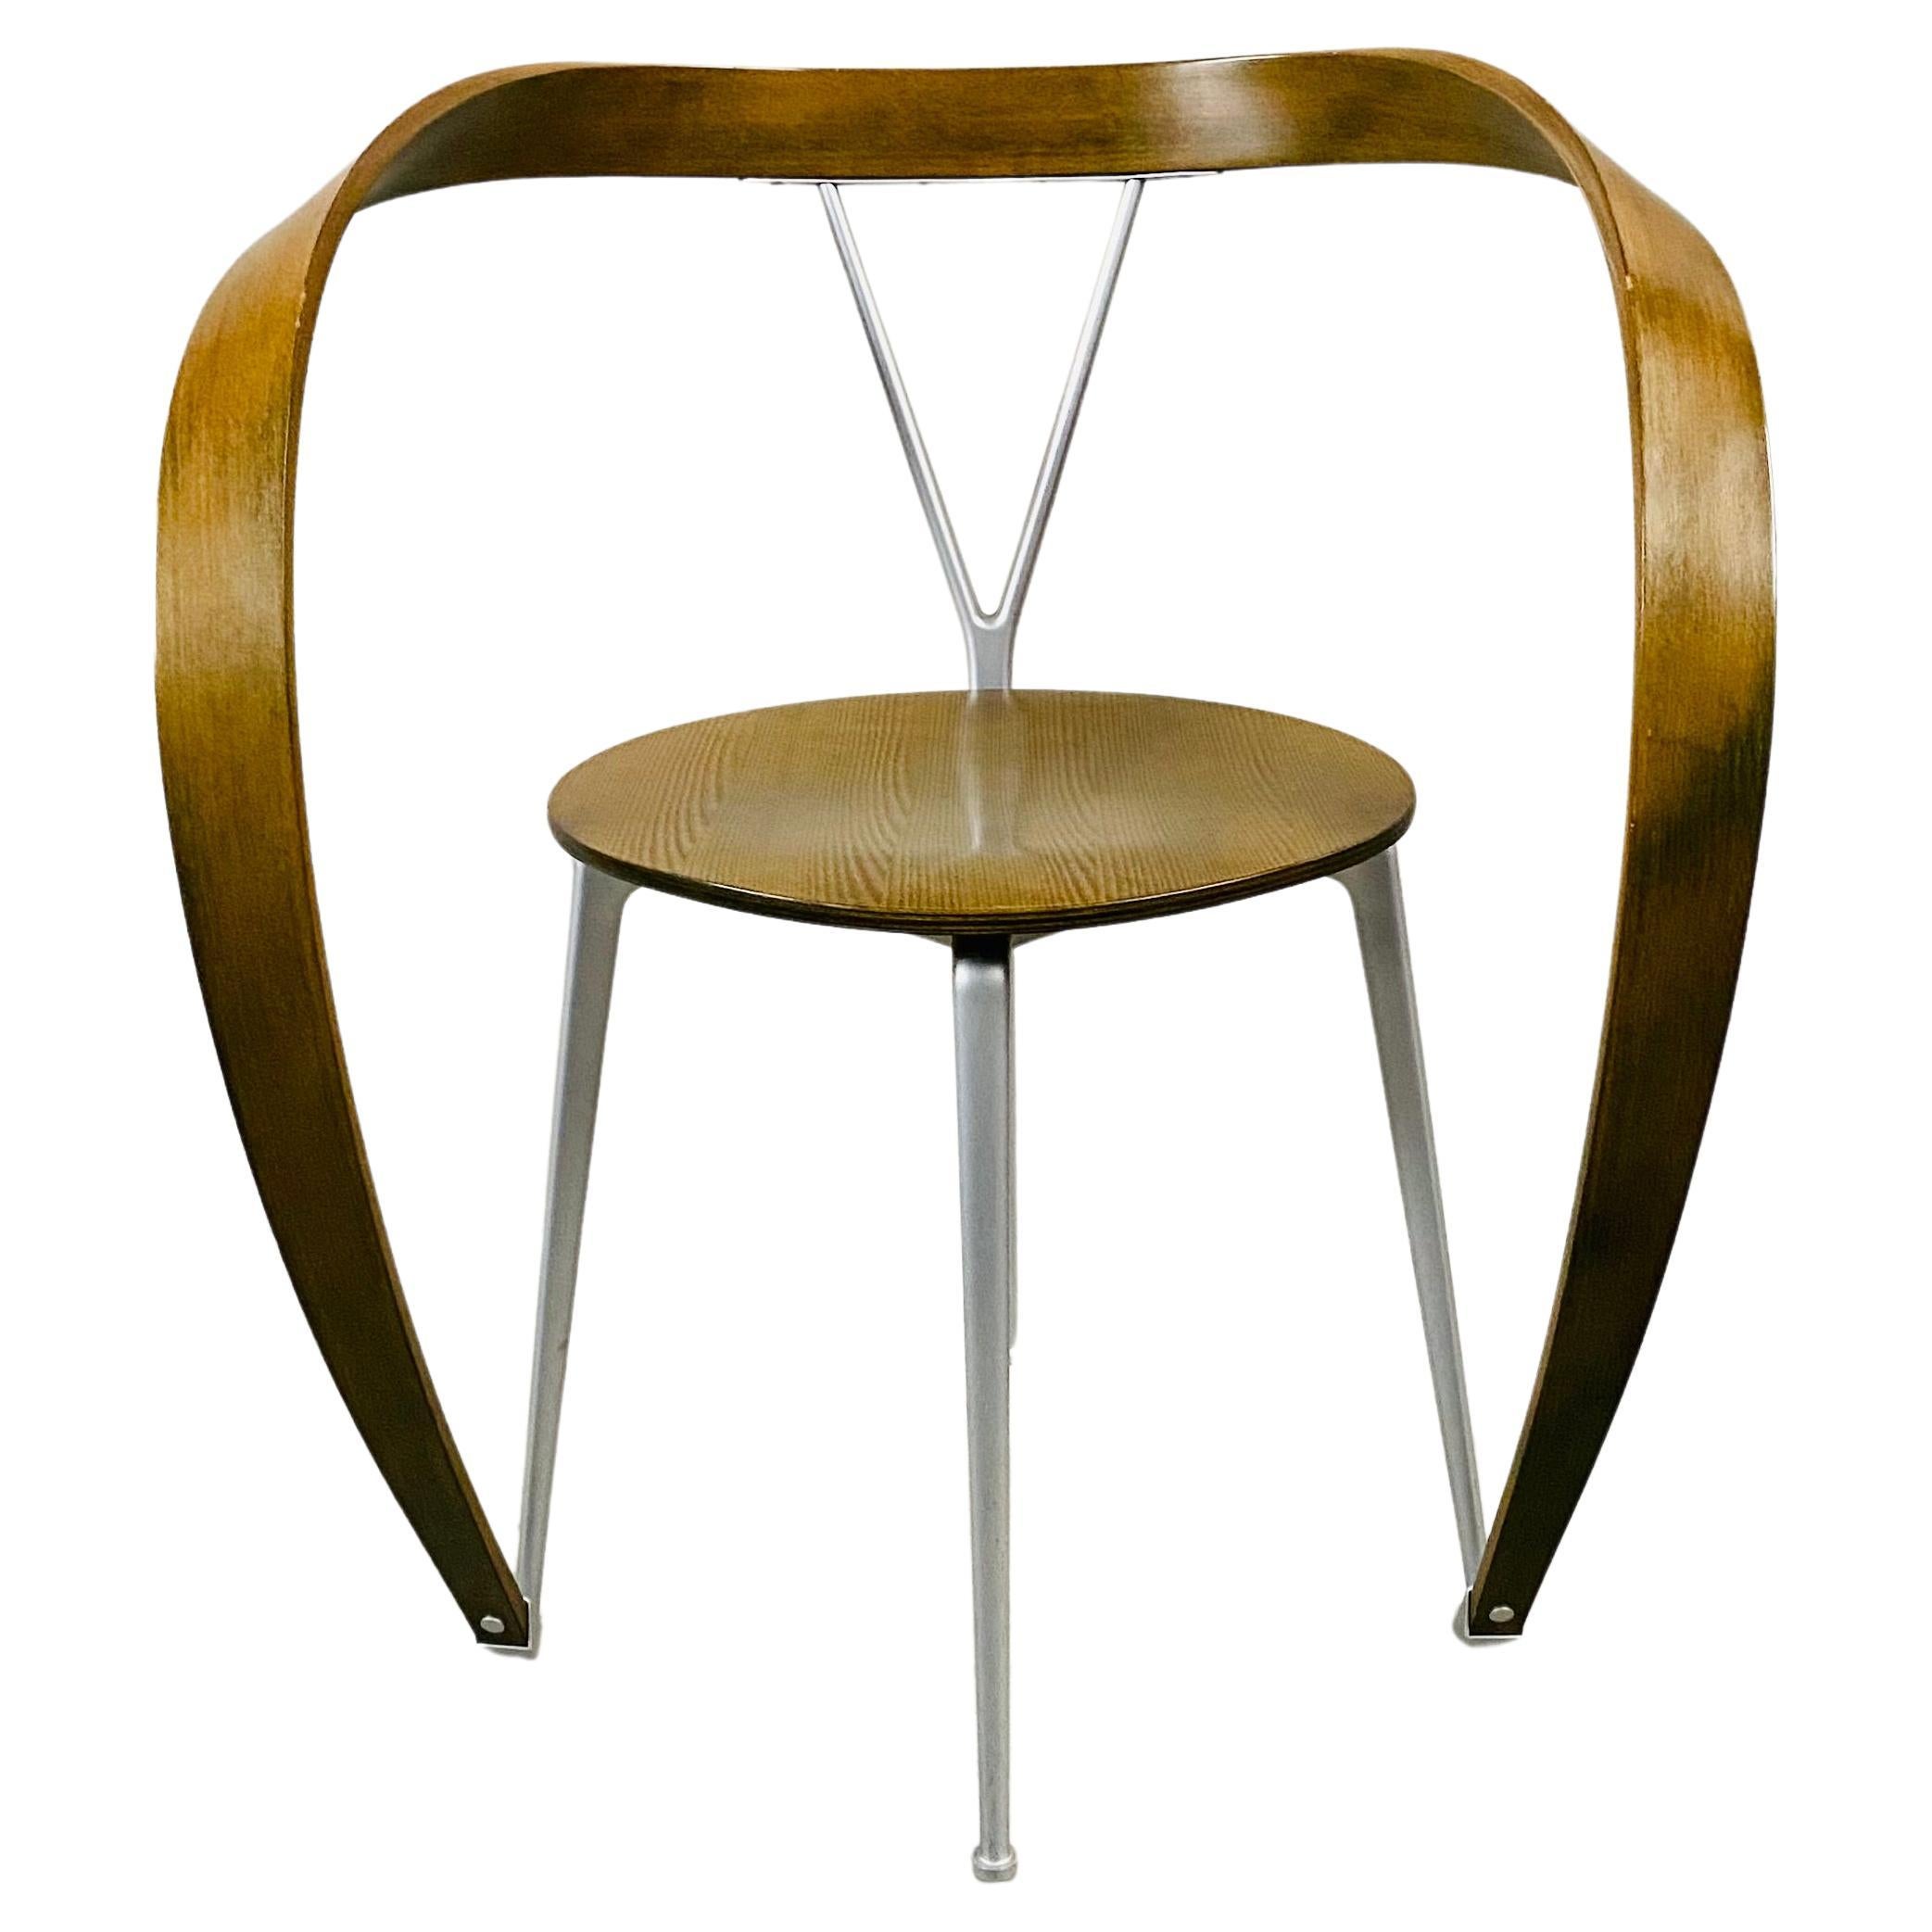 Revers-Stuhl von Andrea Branzi für Cassina, Italienisches Design 1993